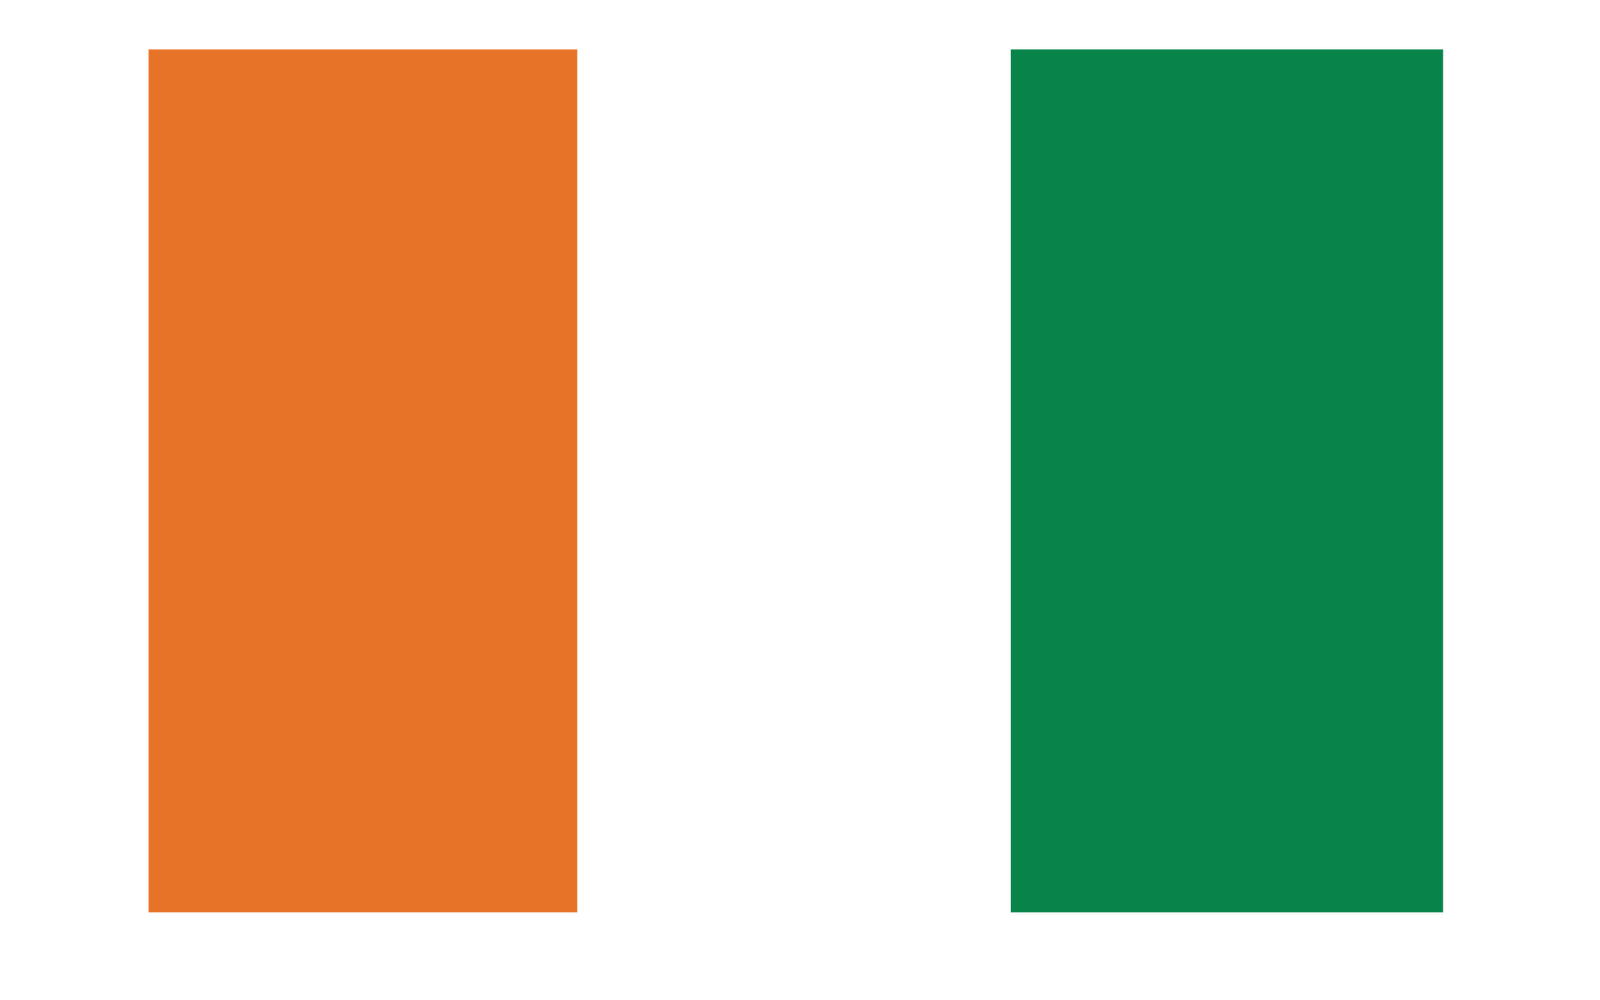 World Flags Cote d’Ivoire Flag 2K wallpapers